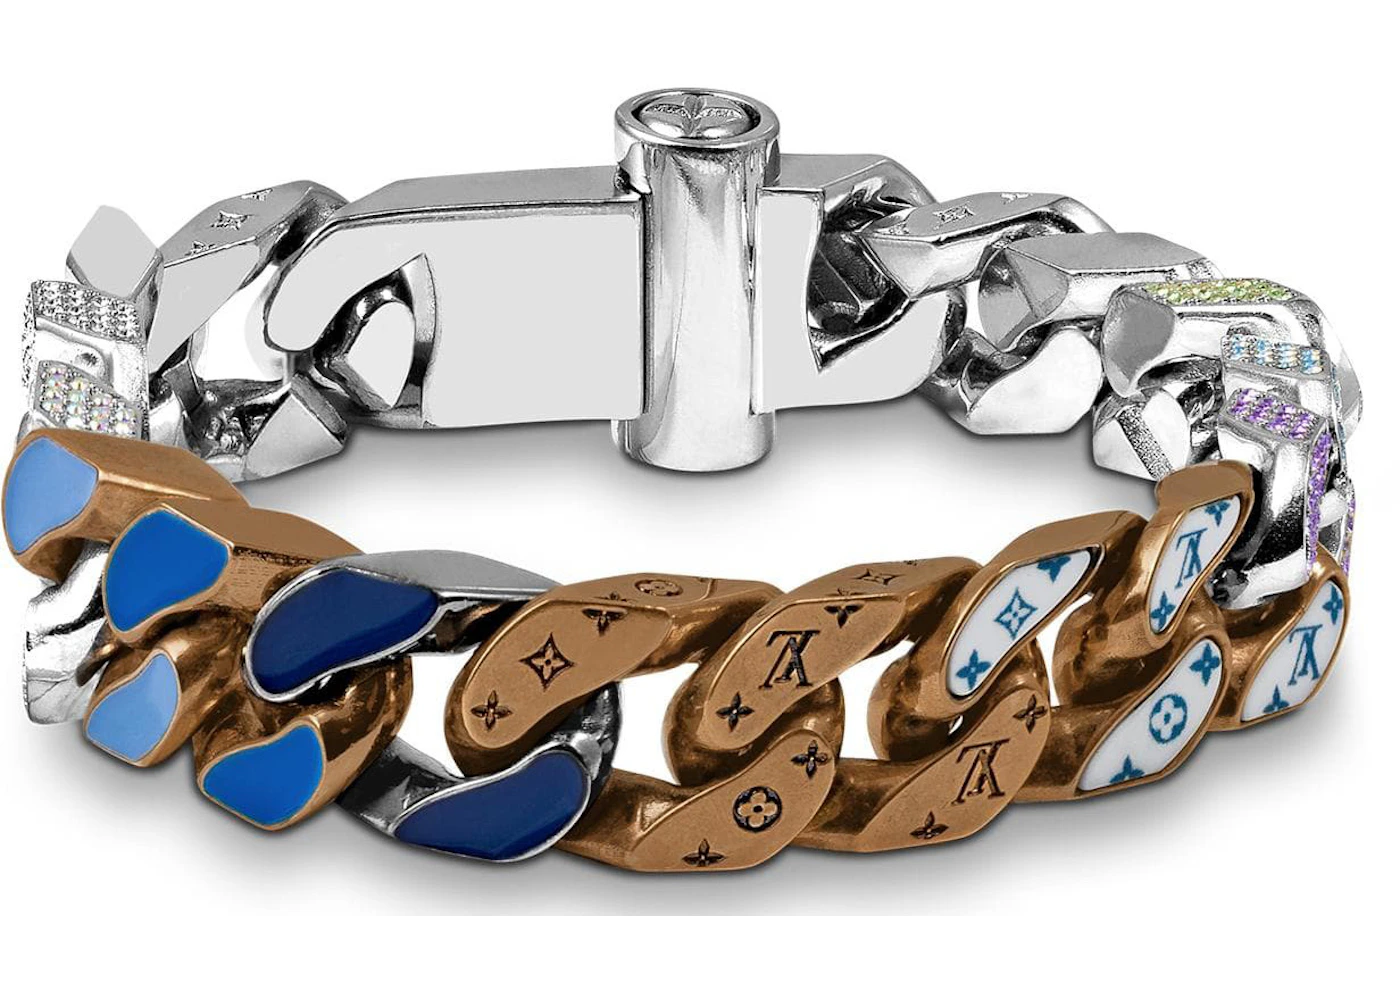 vuitton chain bracelet monogram